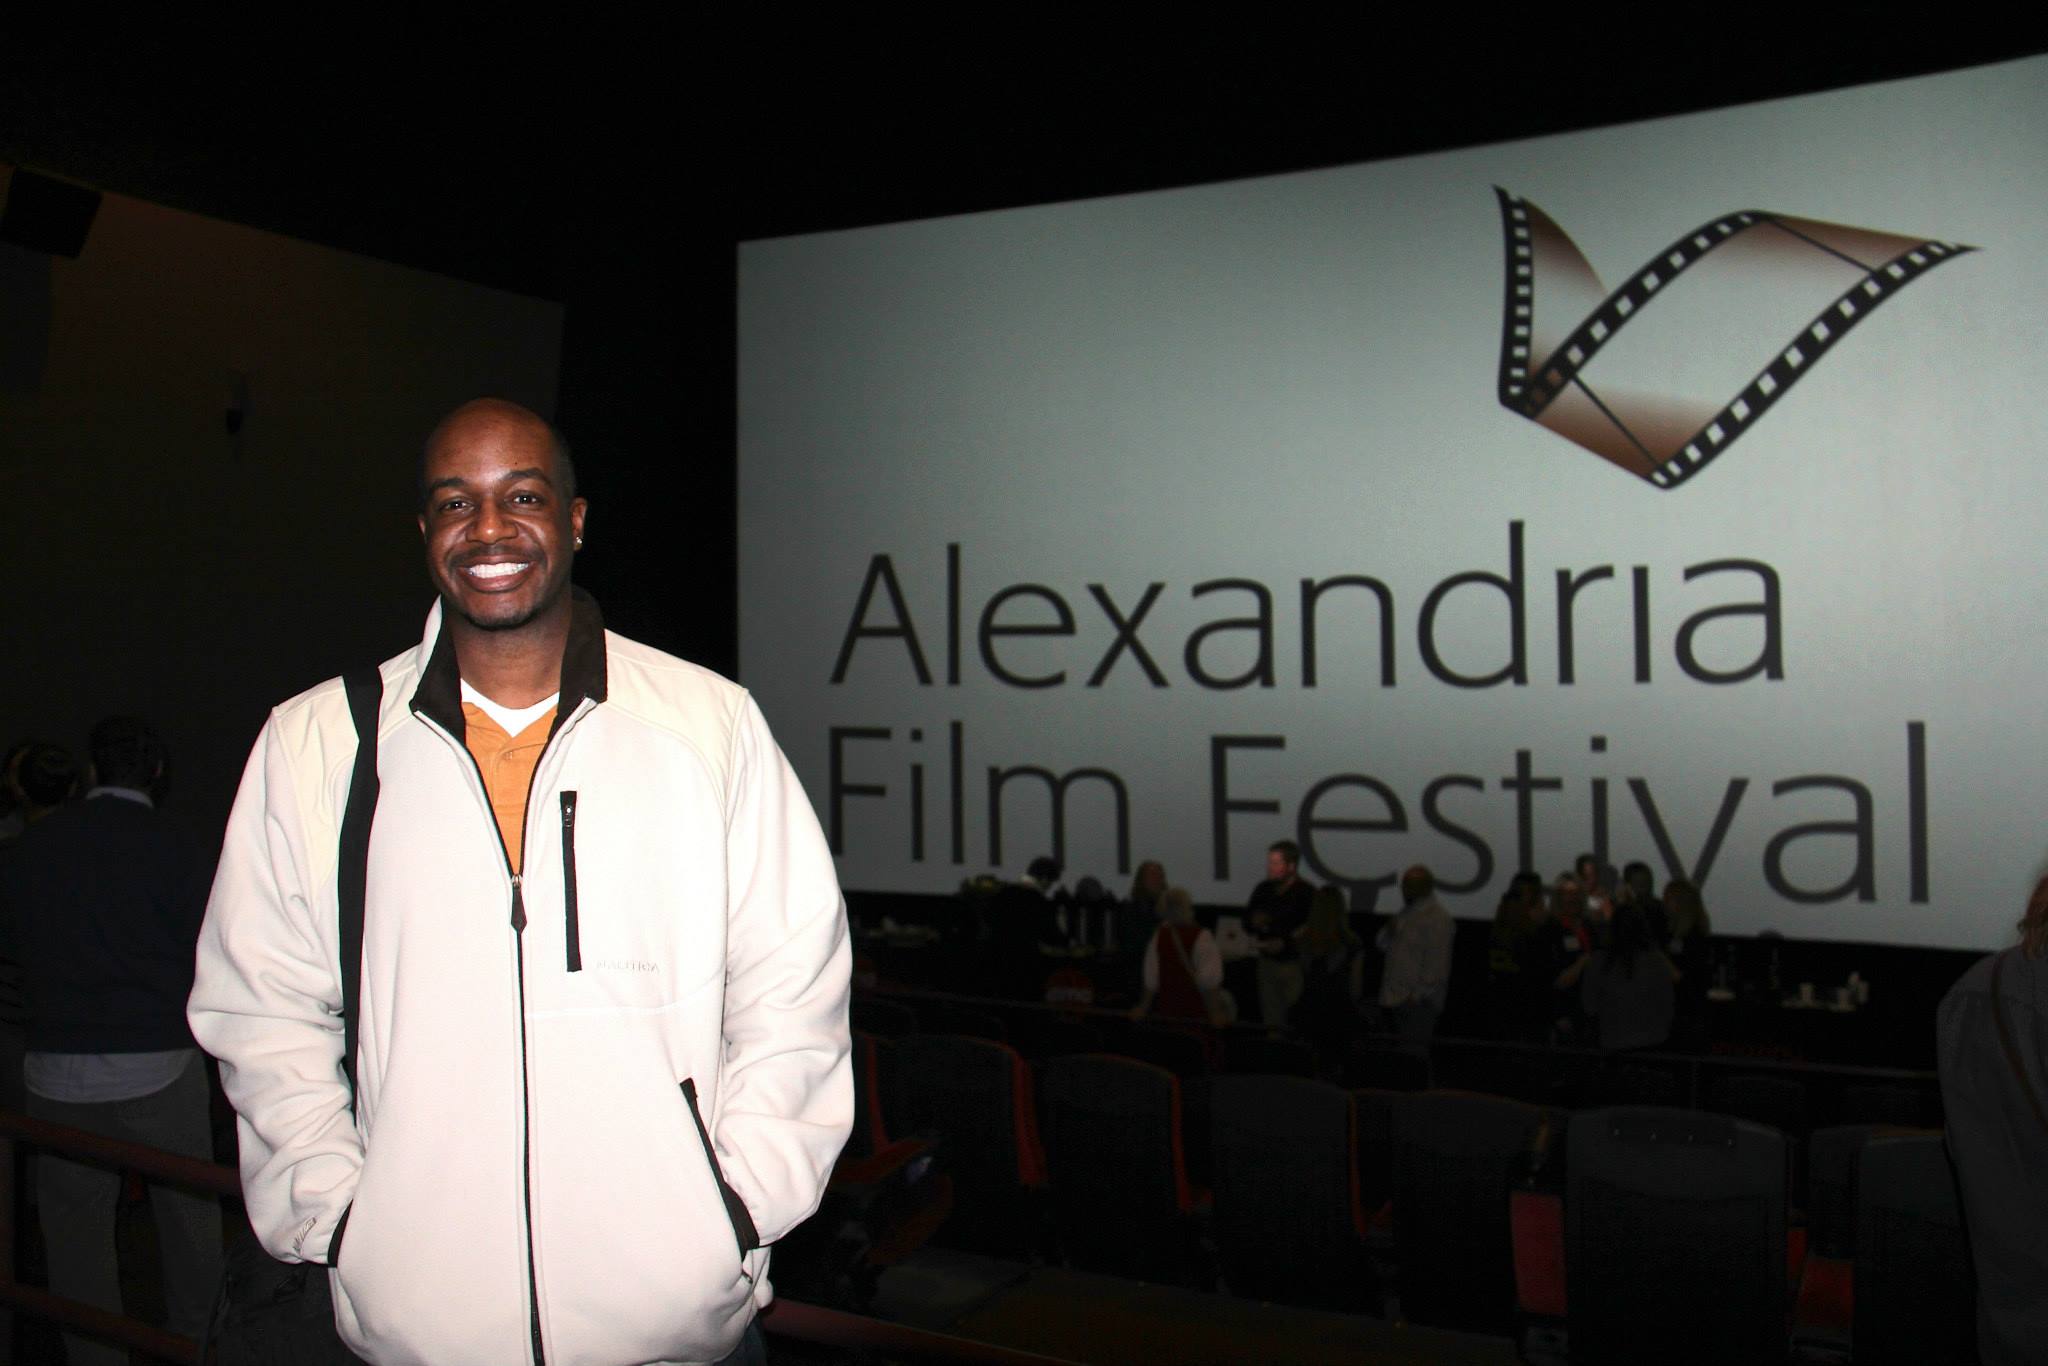 James Lewis at the Alexandria Film Festival.